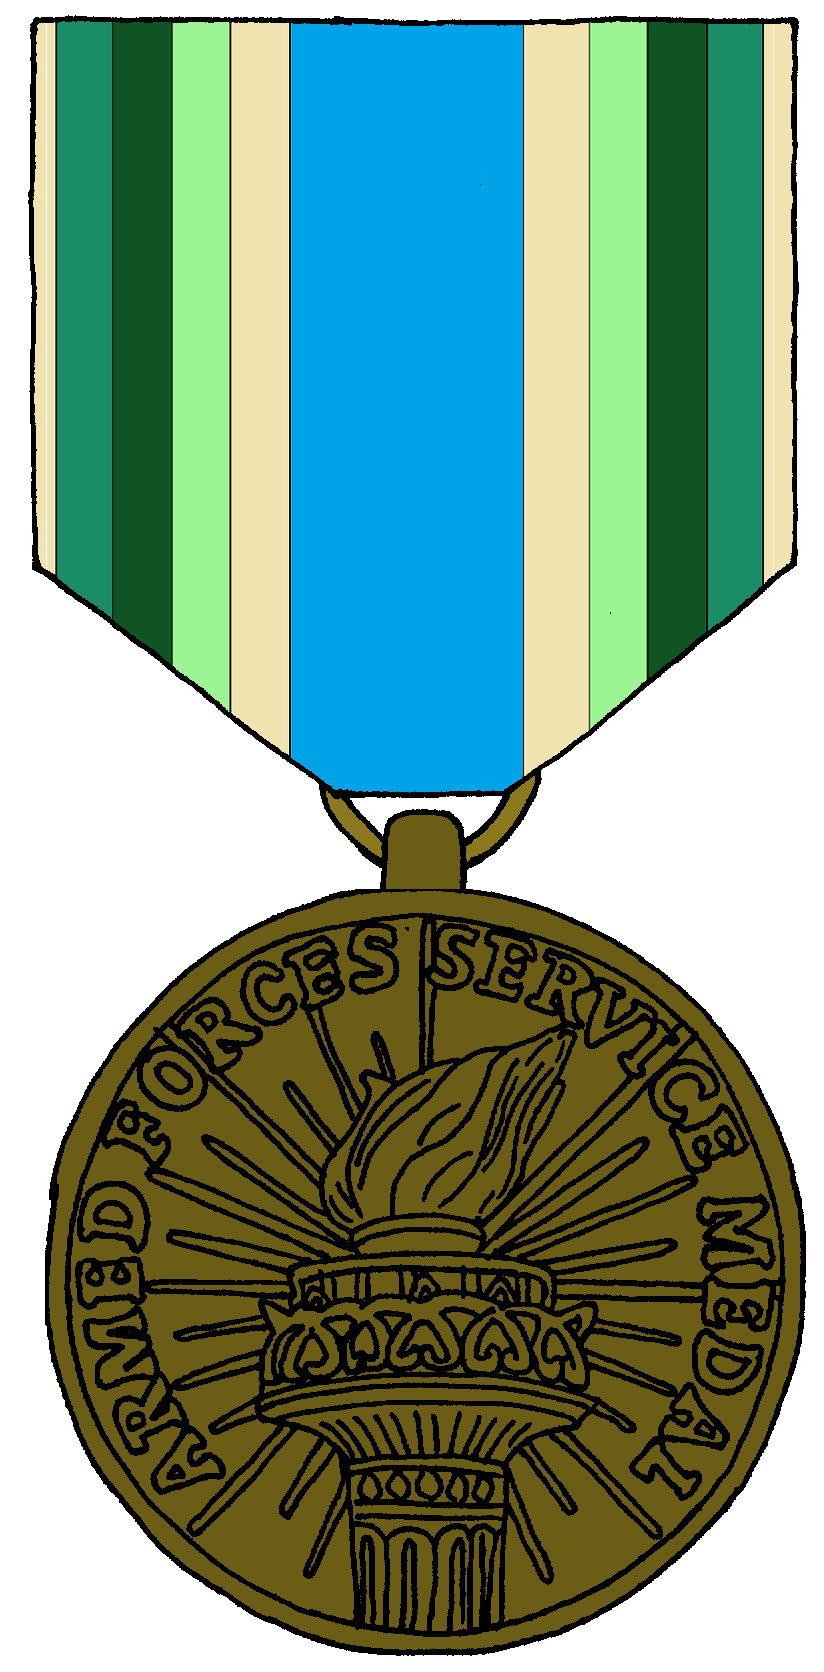 Armed Forces Service Medal by historymaker1986 on DeviantArt